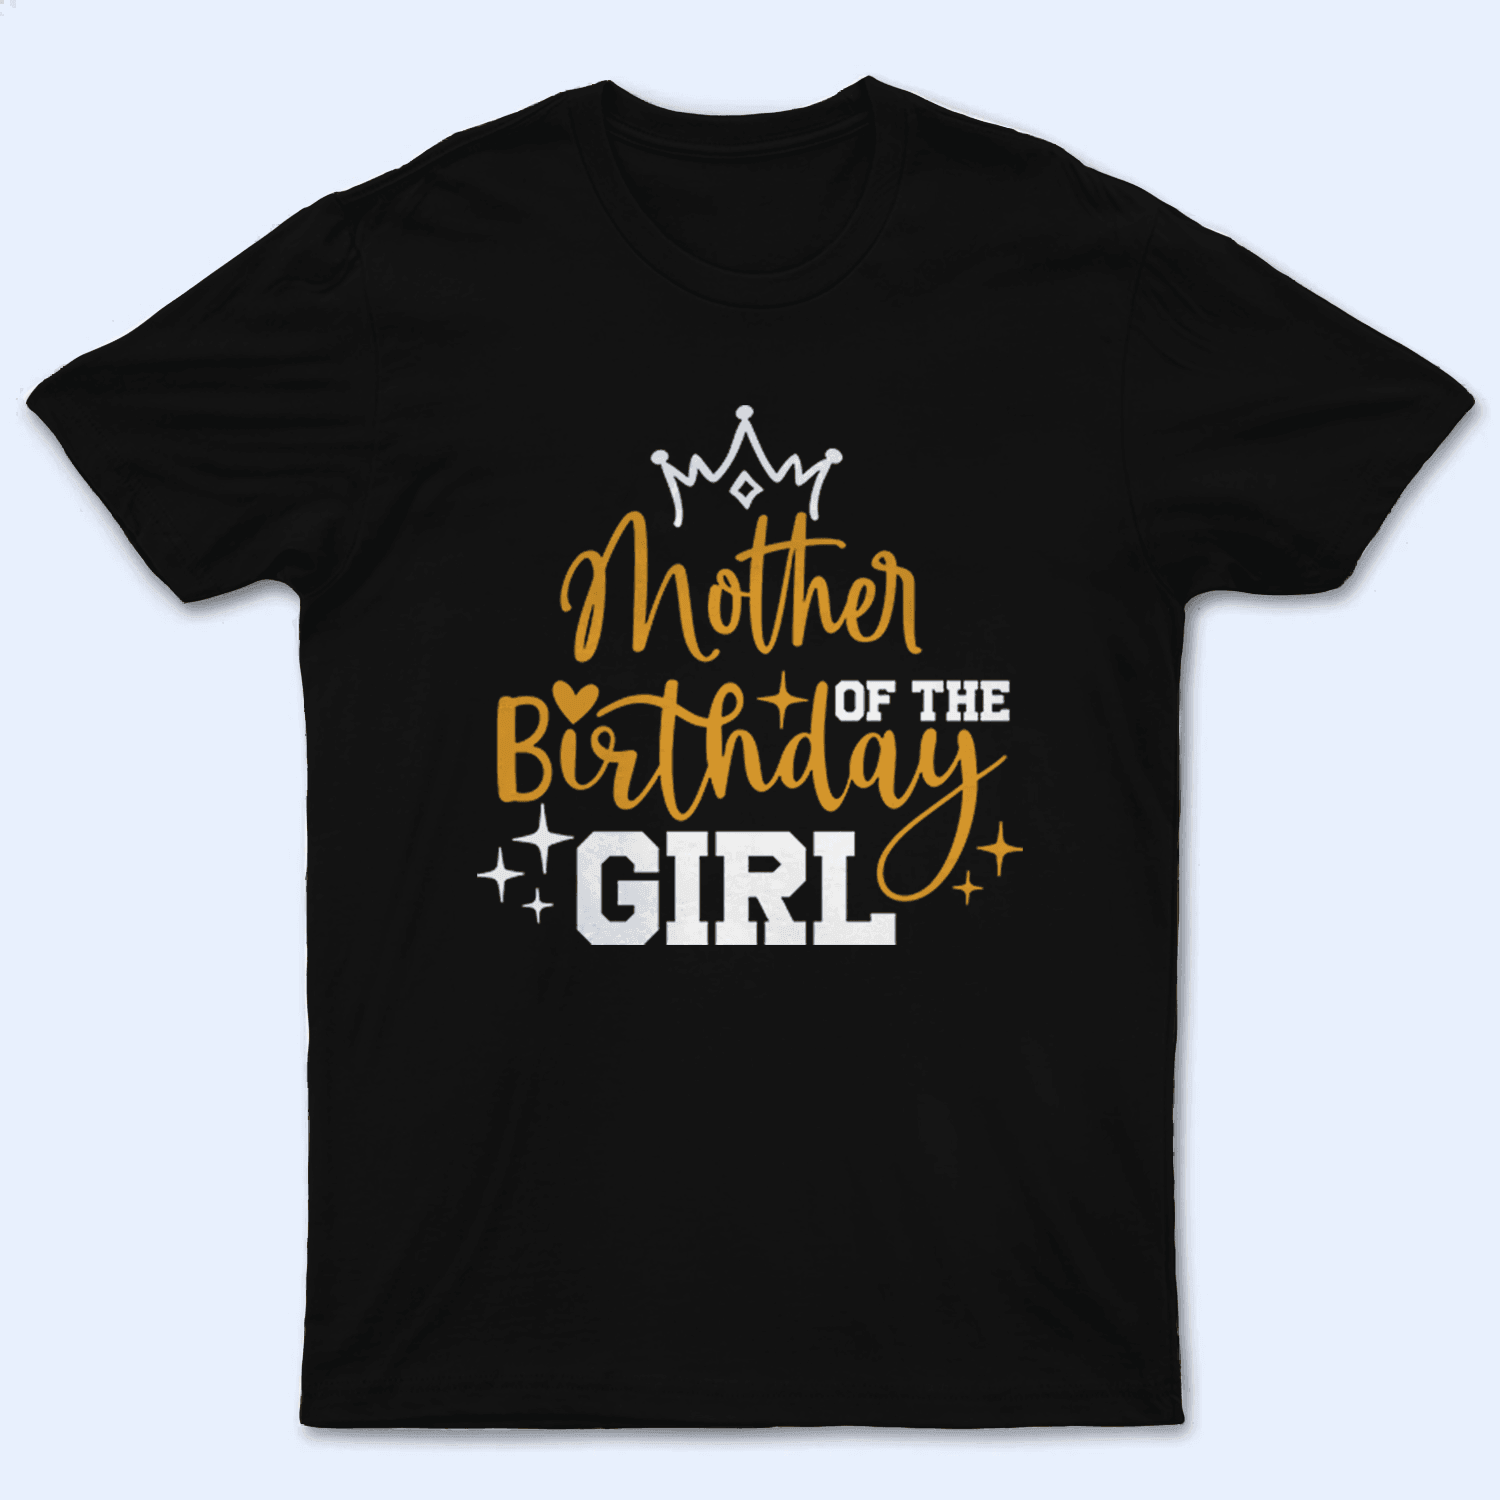 Family of the birthday girl, birthday boy - Personalized Custom T Shirt - Birthday, Bday, Loving, Funny Gift for Family, Dad, Mom, Grandma, Grandpa, Aunt - Suzitee Store